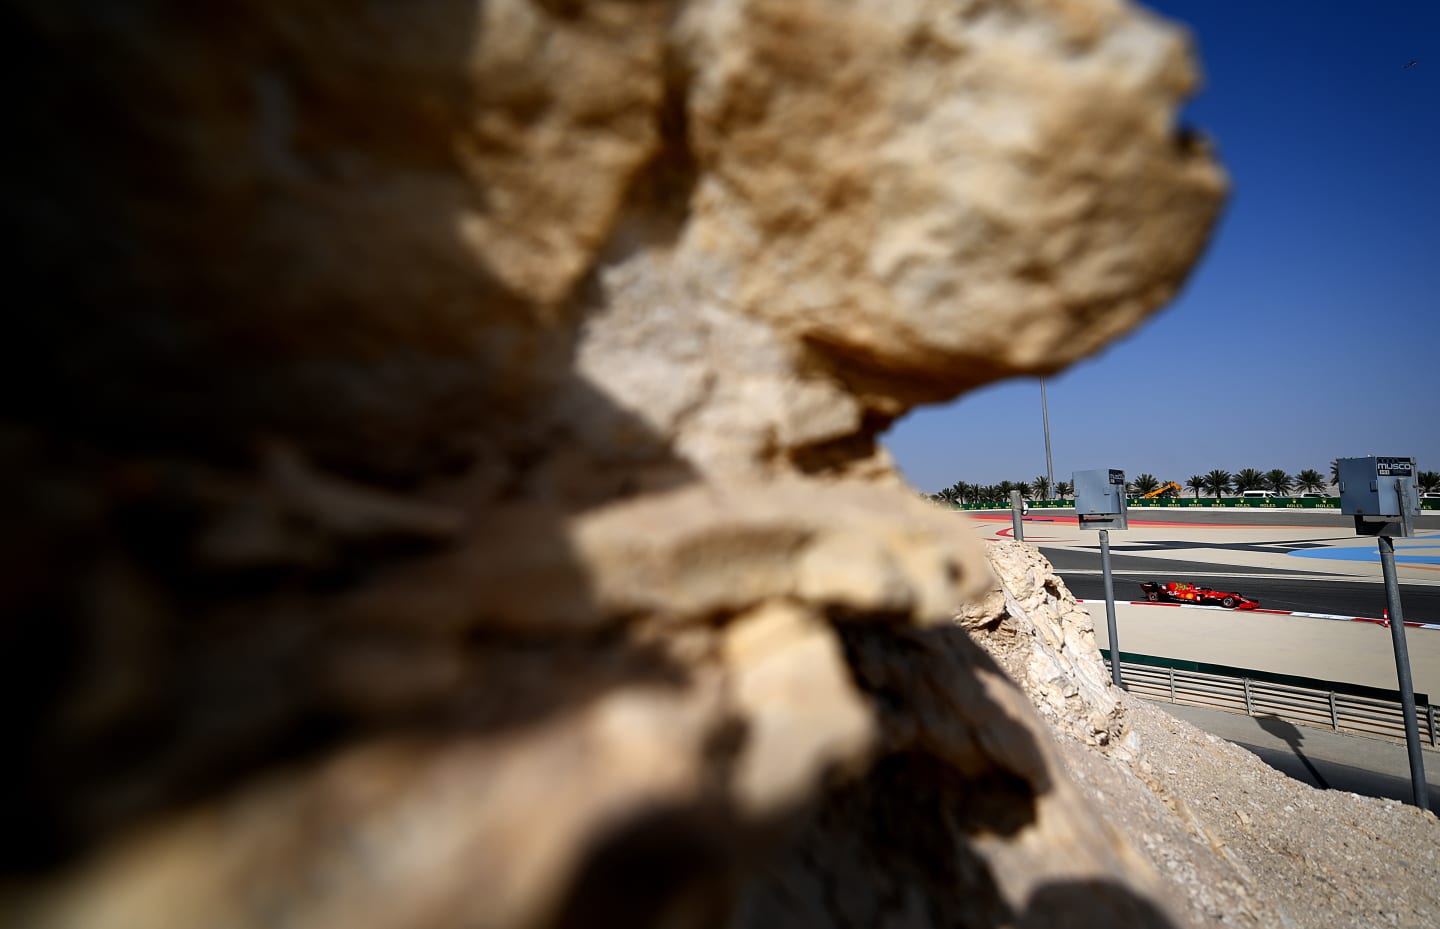 BAHRAIN, BAHRAIN - MARCH 26: Charles Leclerc of Monaco driving the (16) Scuderia Ferrari SF21 drives on track during practice ahead of the F1 Grand Prix of Bahrain at Bahrain International Circuit on March 26, 2021 in Bahrain, Bahrain. (Photo by Clive Mason - Formula 1/Formula 1 via Getty Images)